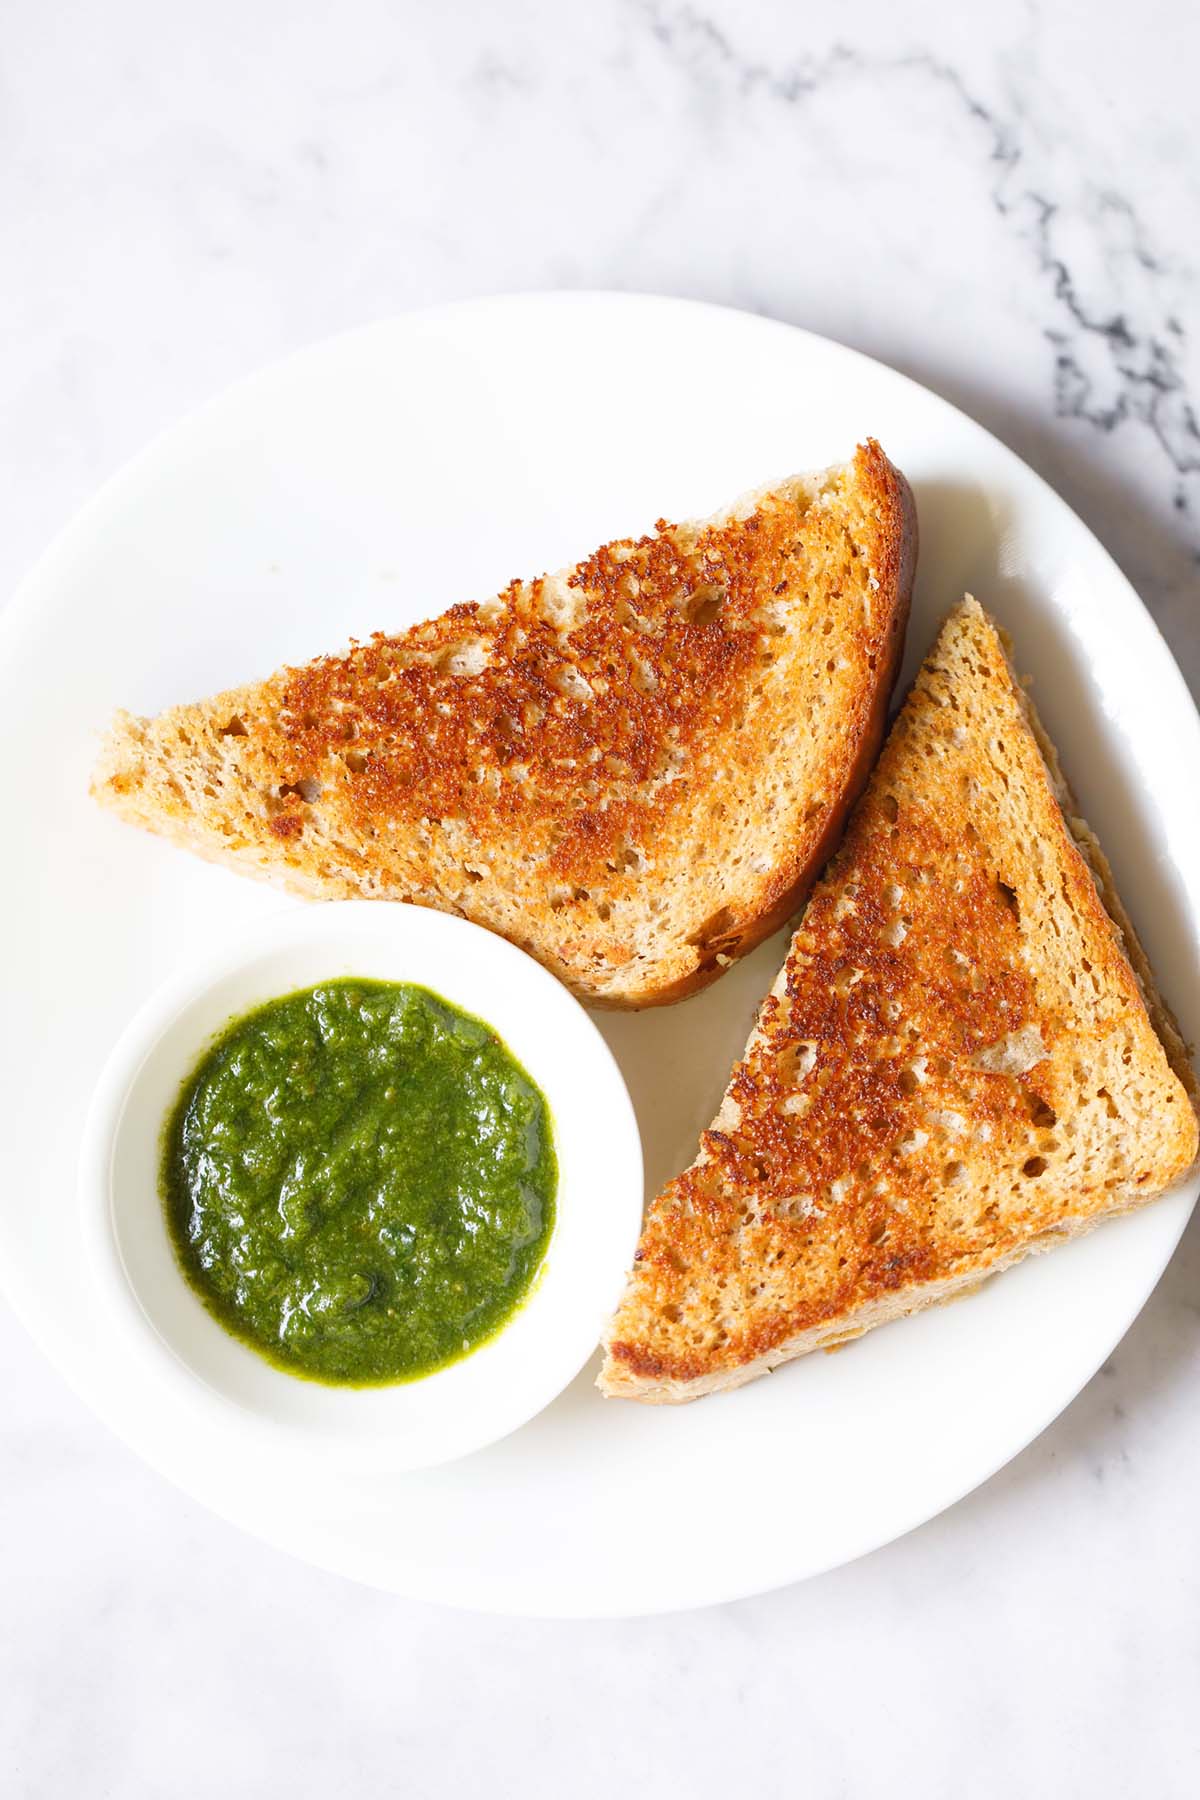 https://www.vegrecipesofindia.com/wp-content/uploads/2021/04/cheese-sandwich-recipe-1.jpg